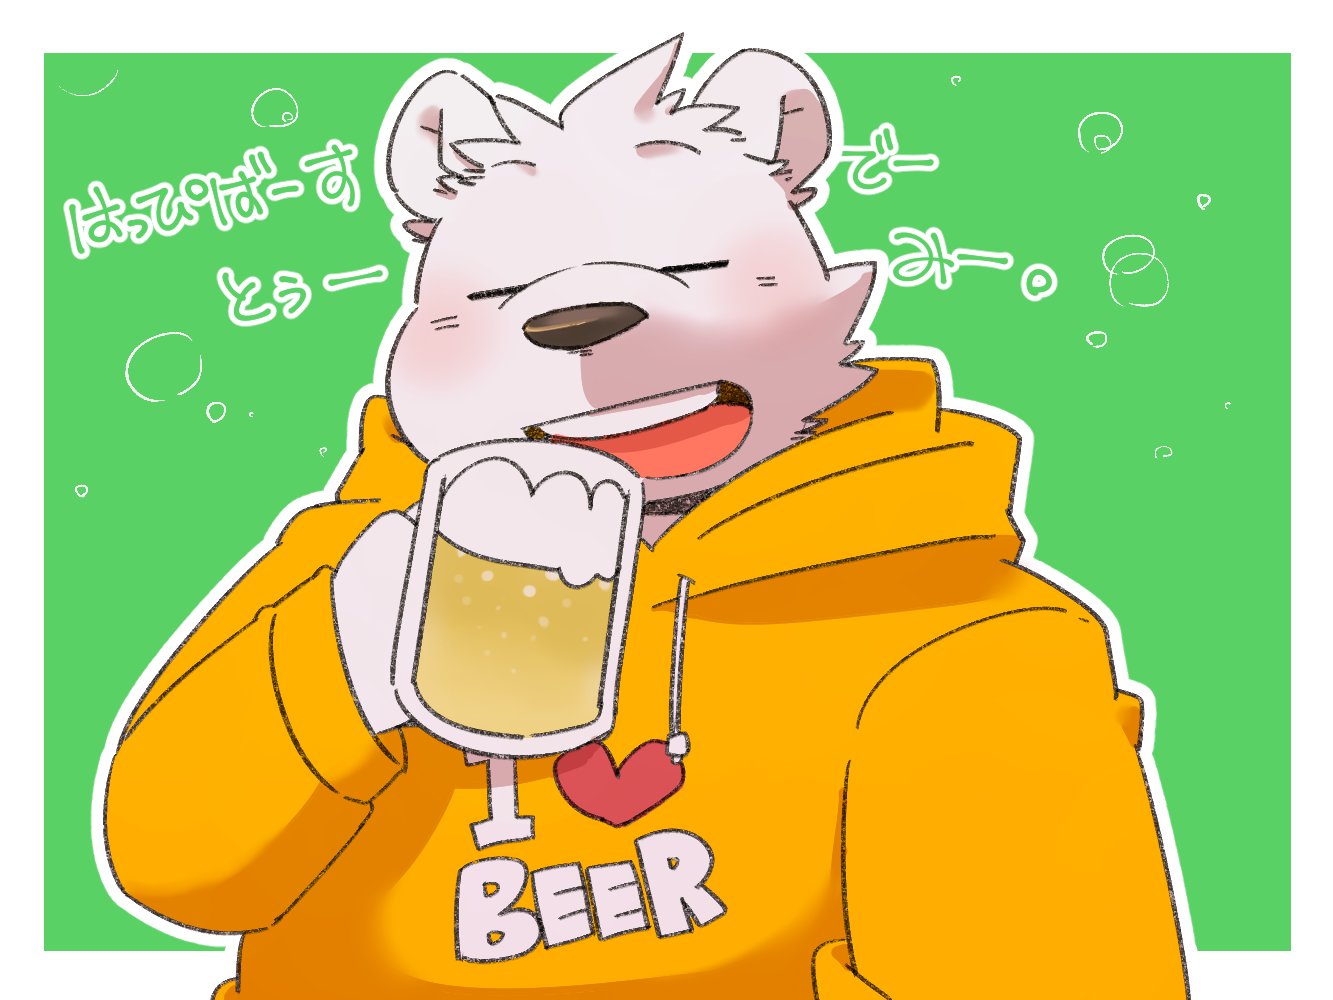 &lt;3 2020 alcohol anthro beer beverage blush clothing eyes_closed fur green_bell inakamichi japanese_text kemono mammal polar_bear solo text text_on_clothing ursid ursine white_body white_fur